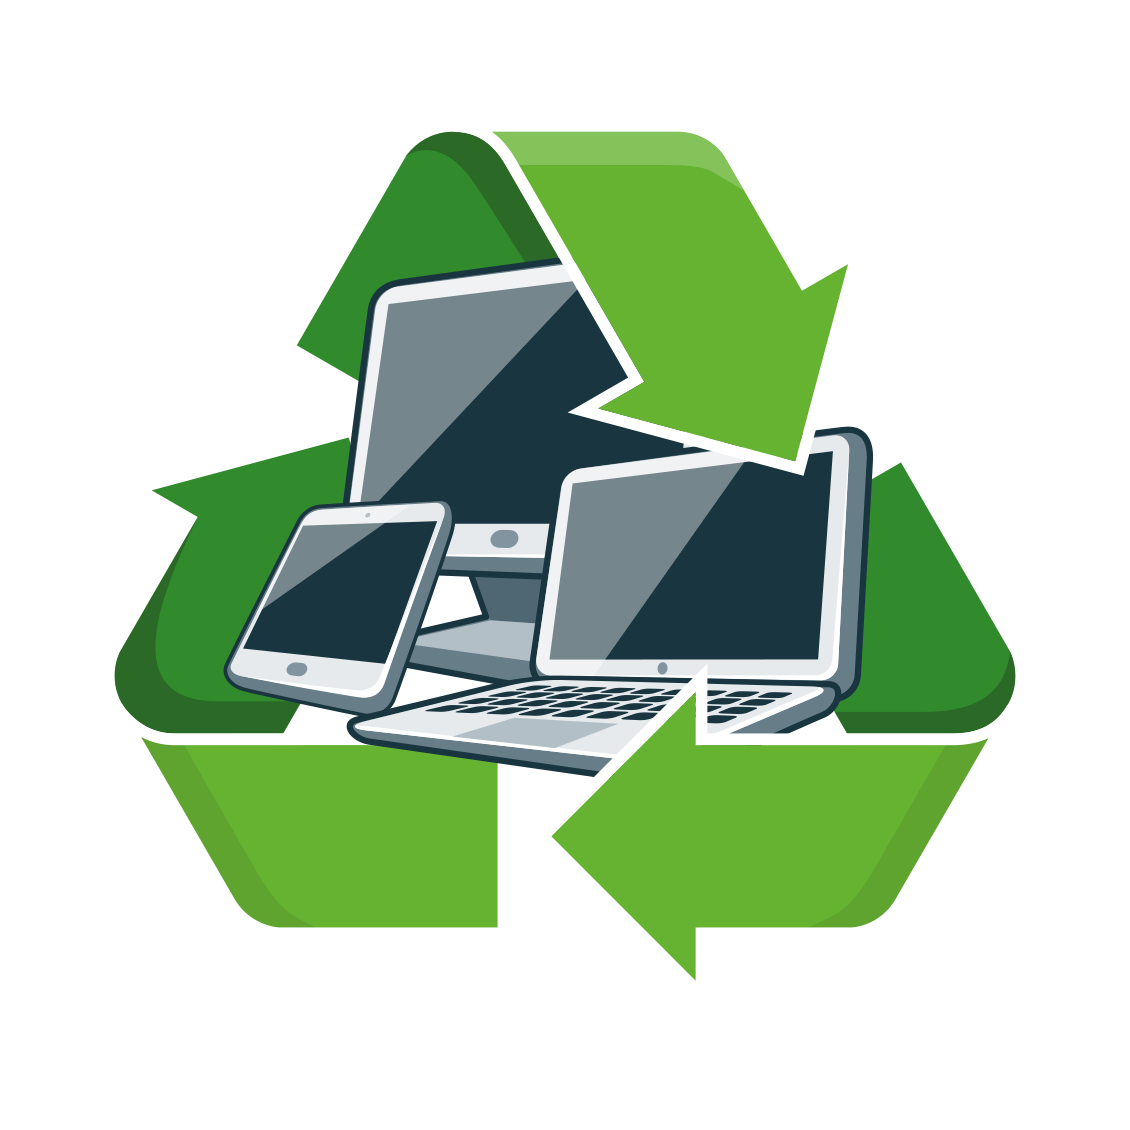 residuos electronicos reciclaje